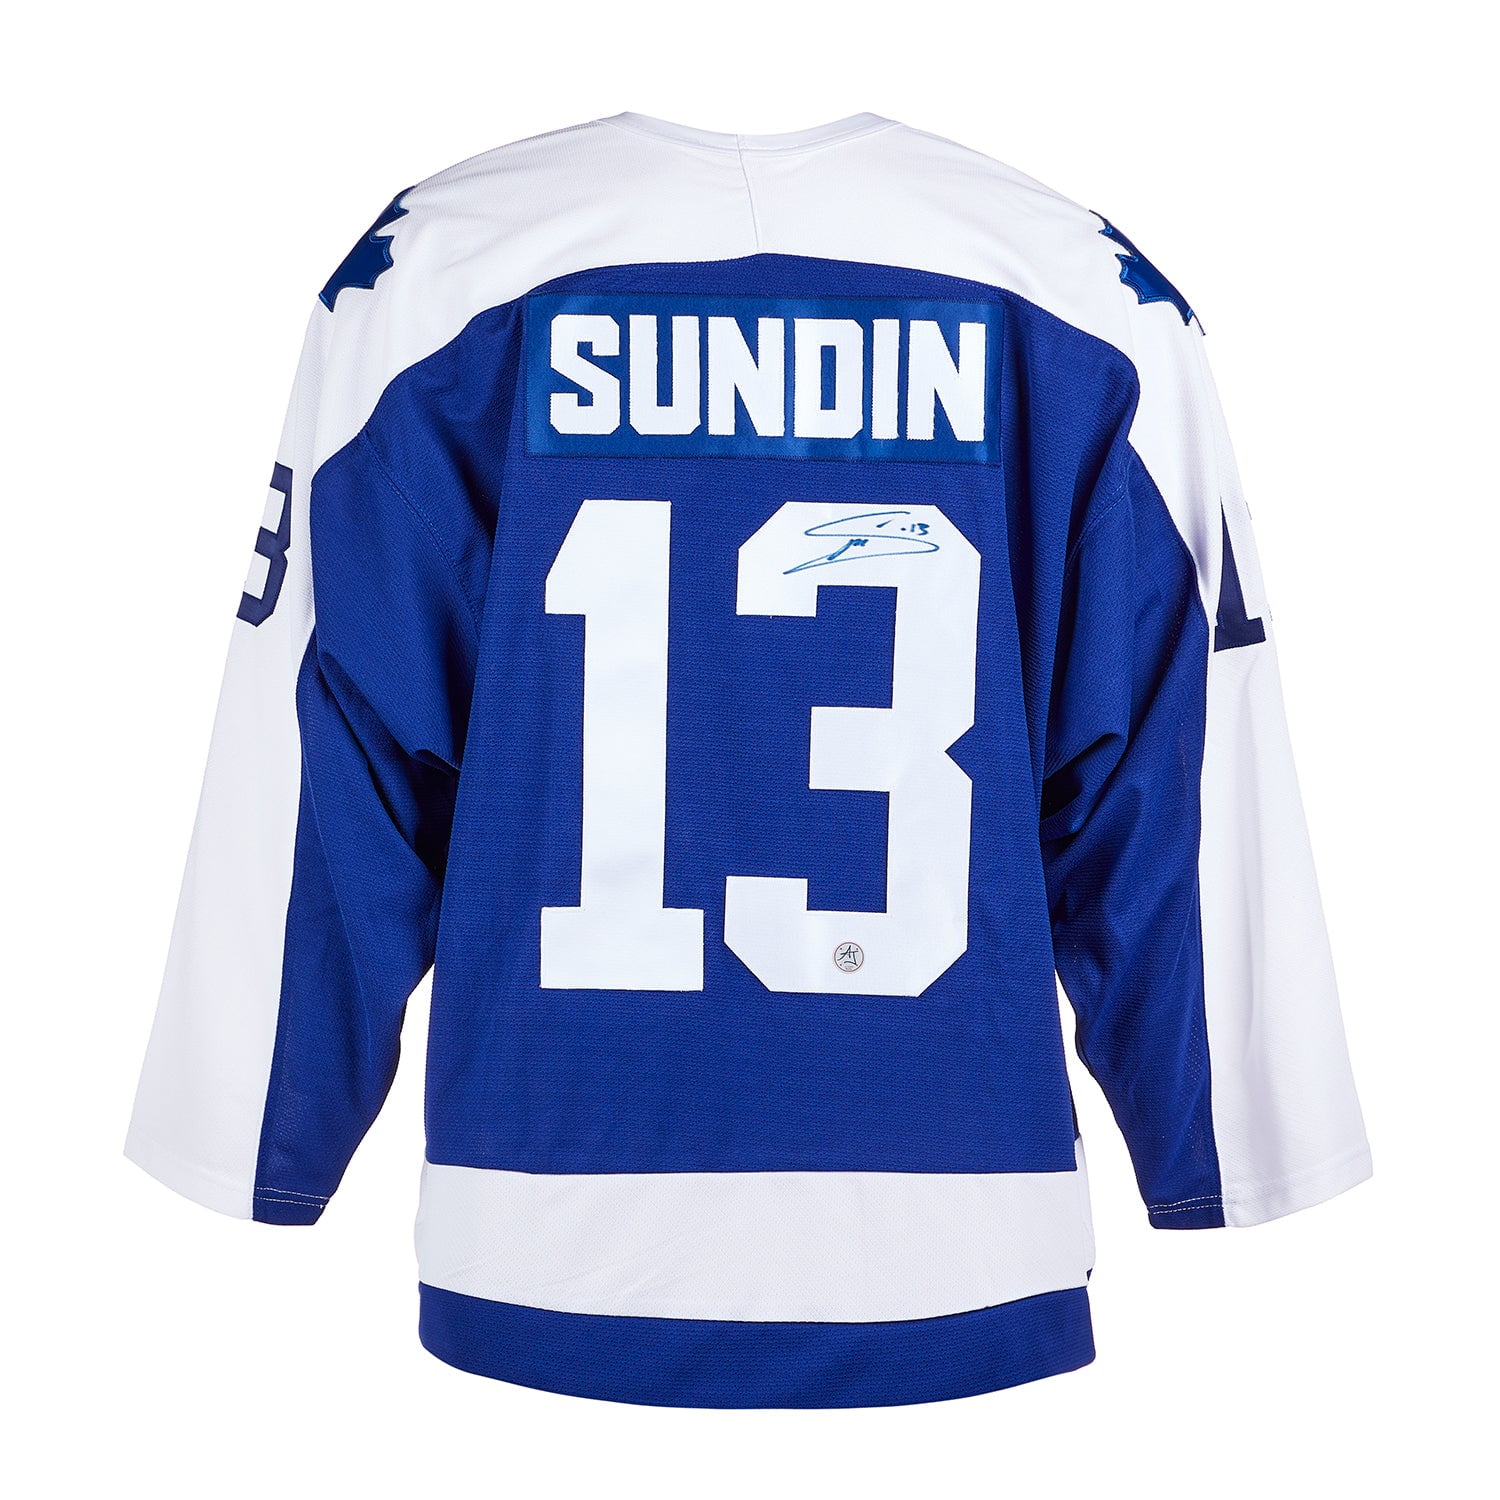 Mats Sundin Signed Toronto Maple Leafs Jersey